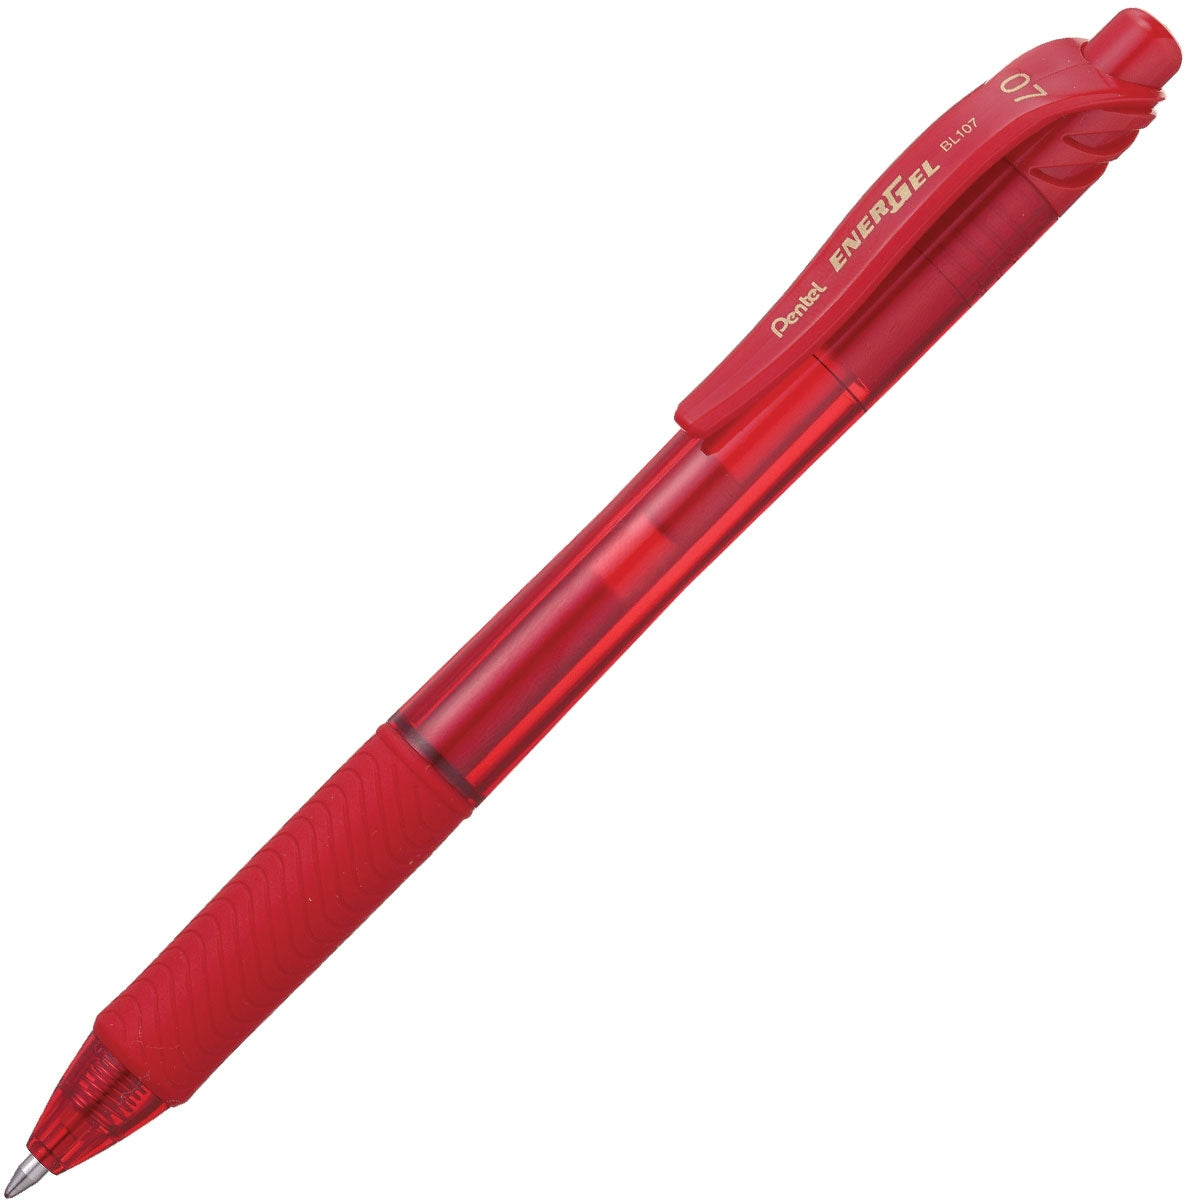 עט רולר לחצן פנטל ג'ל 0.7 - BL107